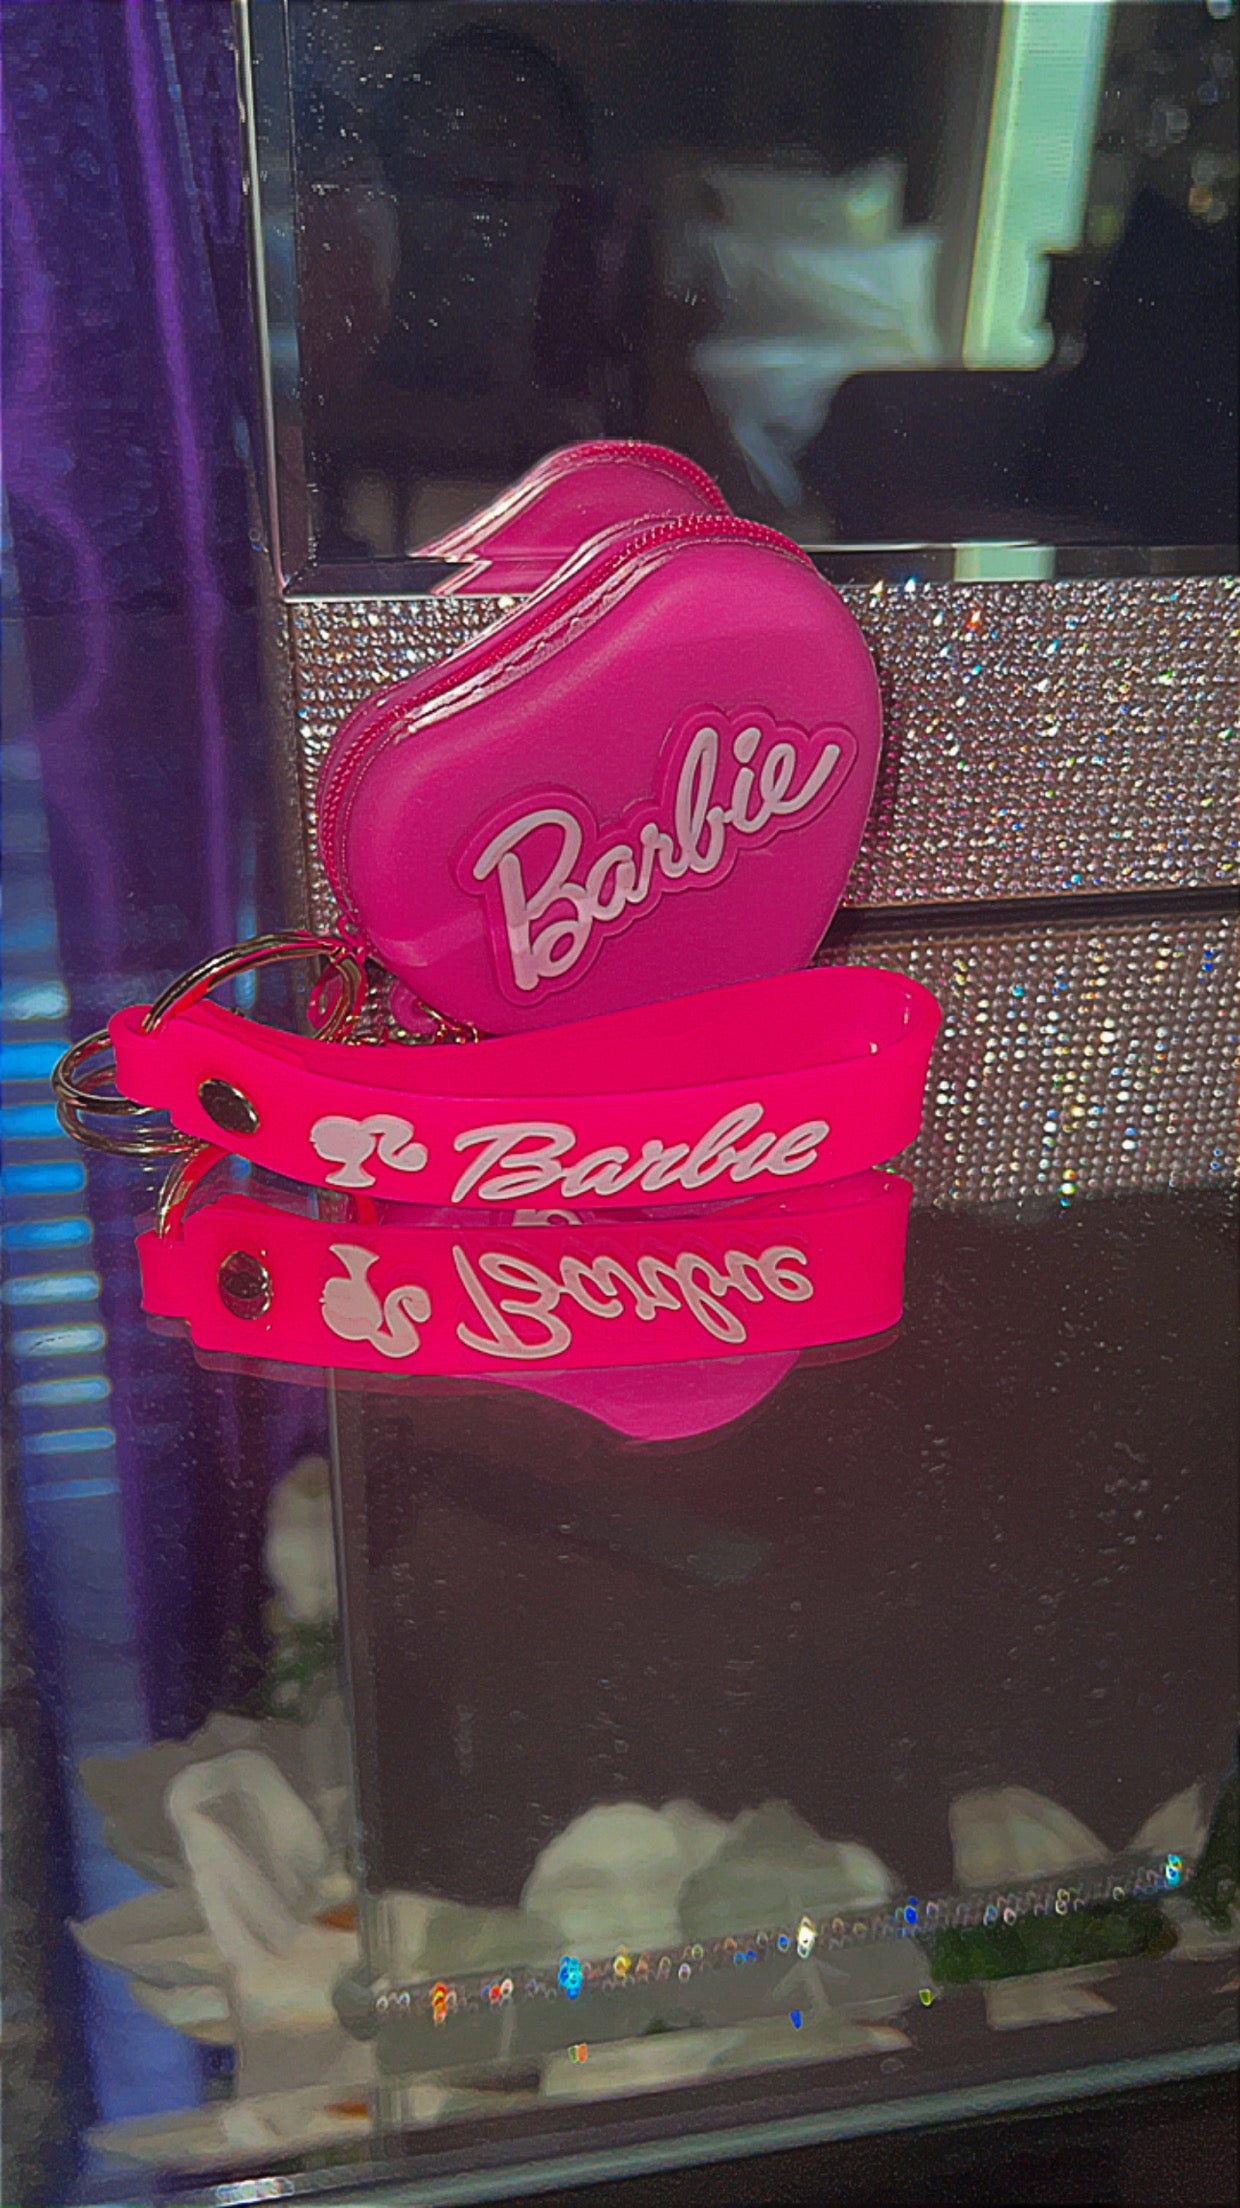 Barbiee Airpod Case